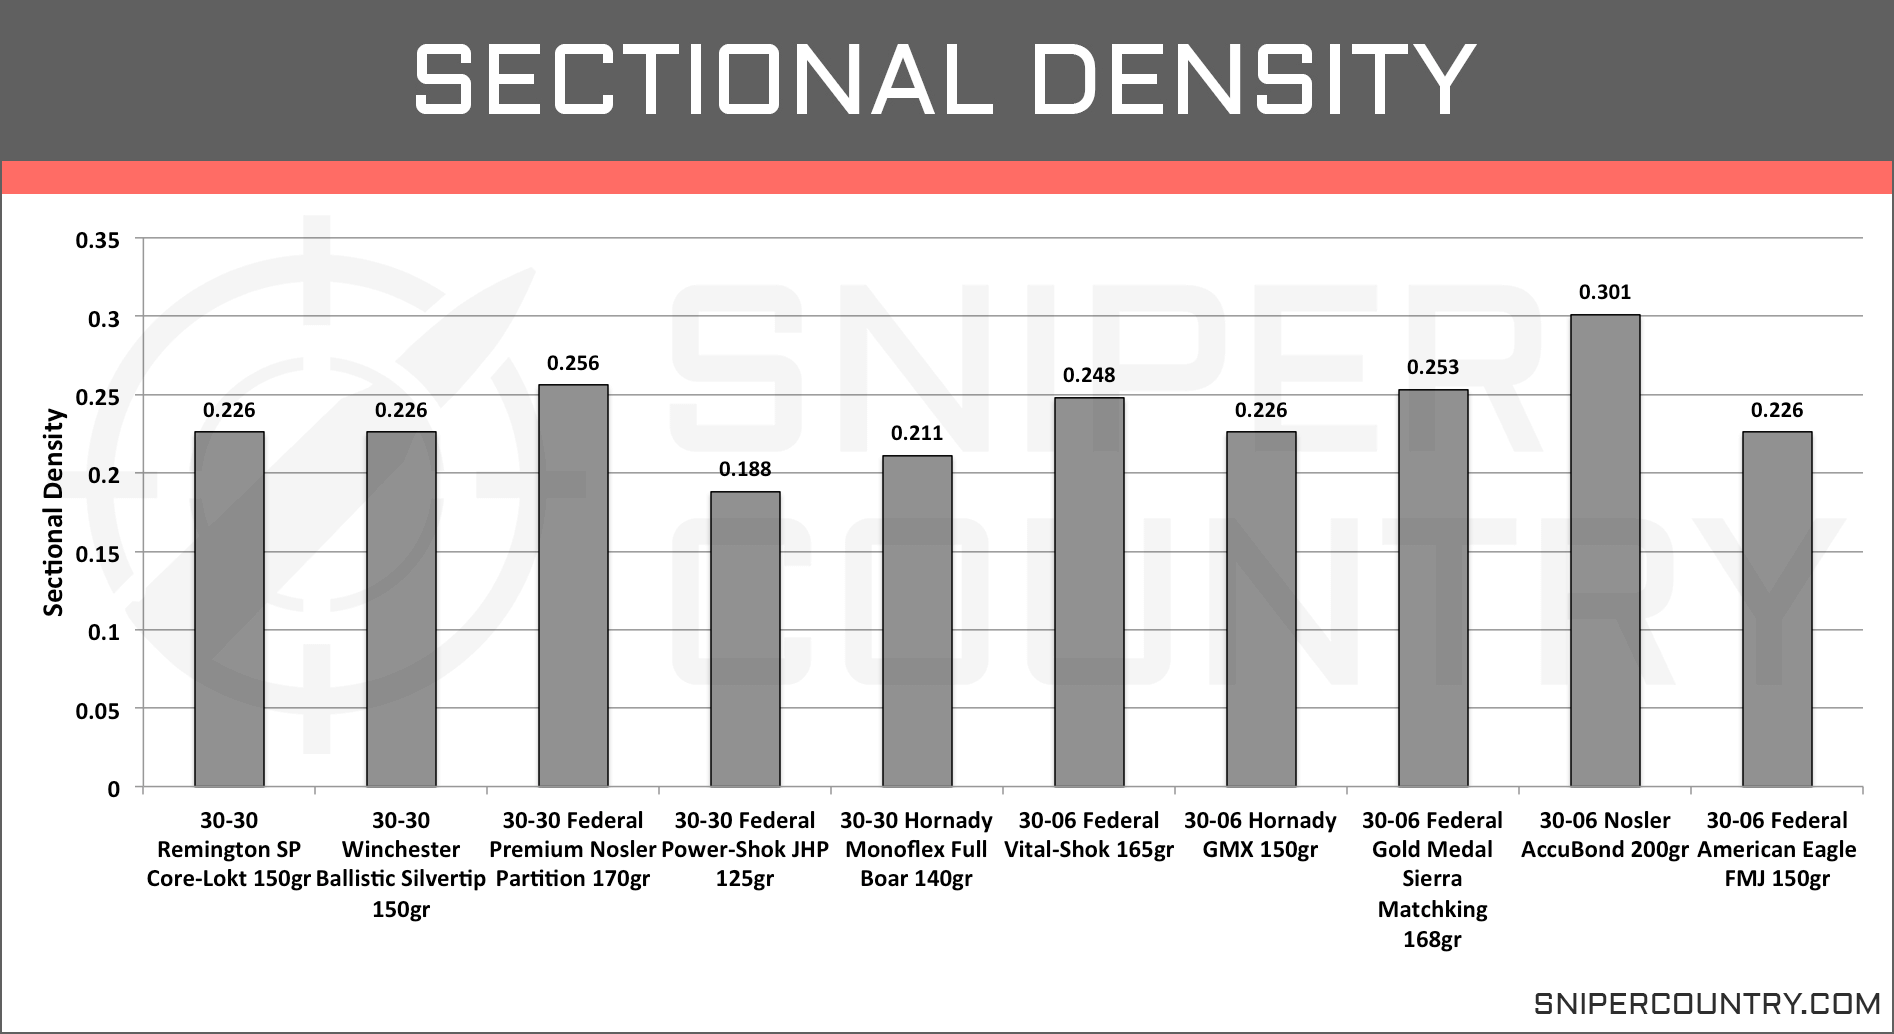 Rifle Primer Comparison Chart